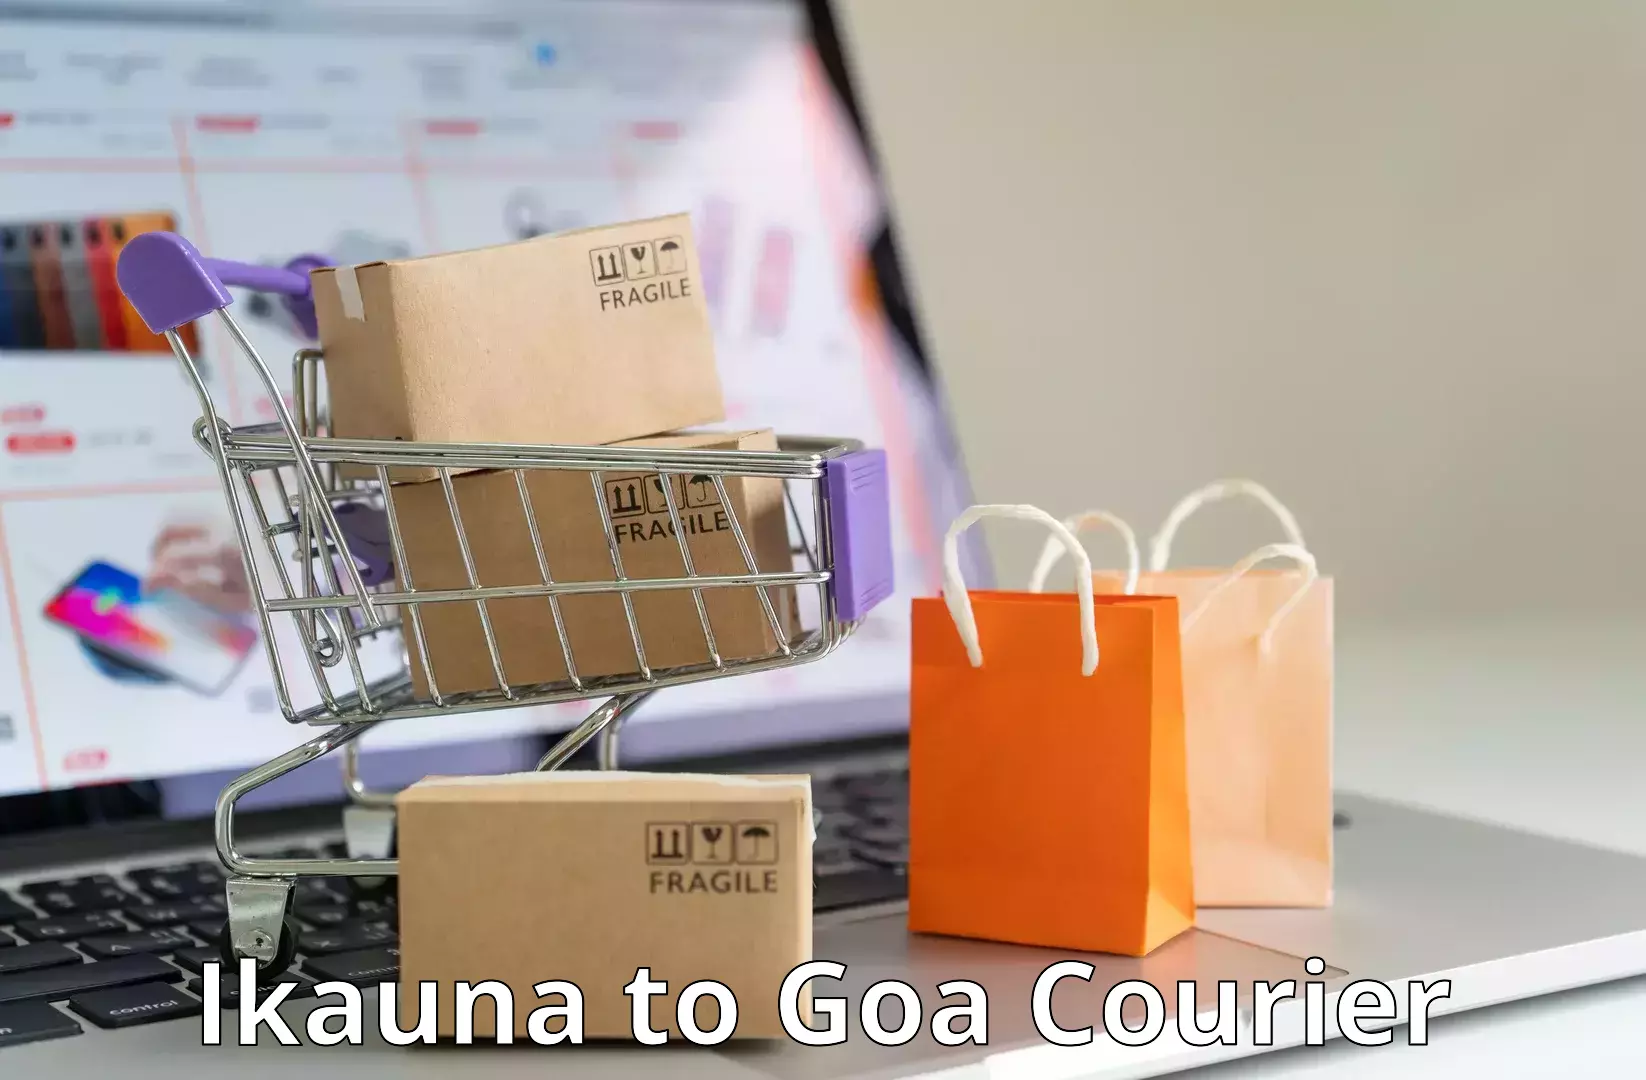 Urban courier service Ikauna to Goa